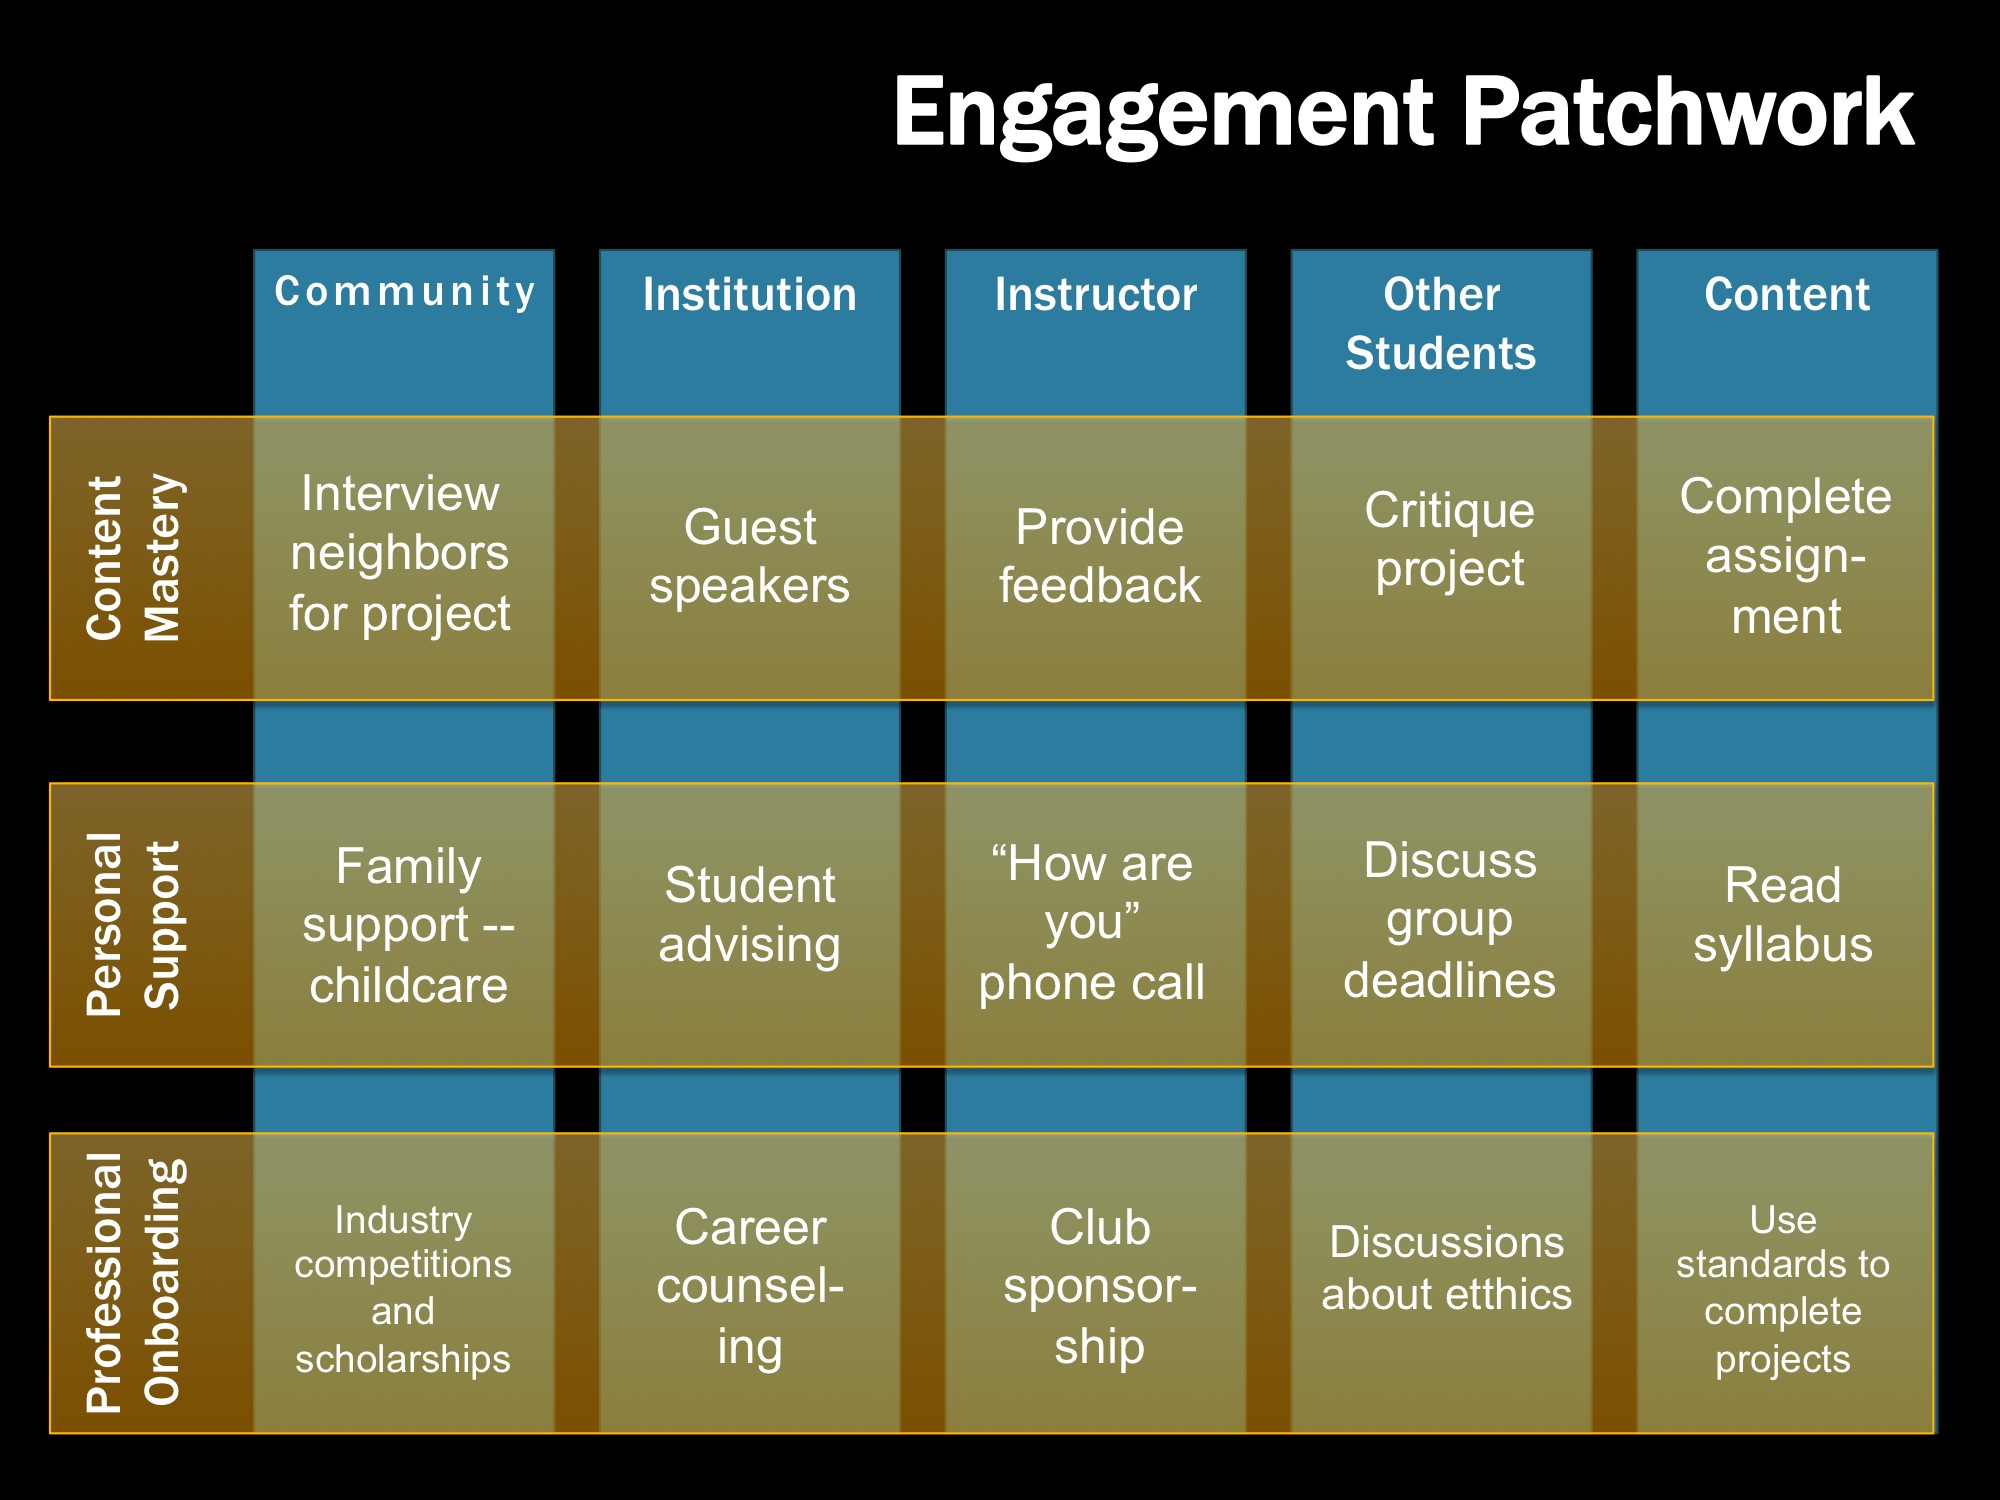 Student engagement patchwork